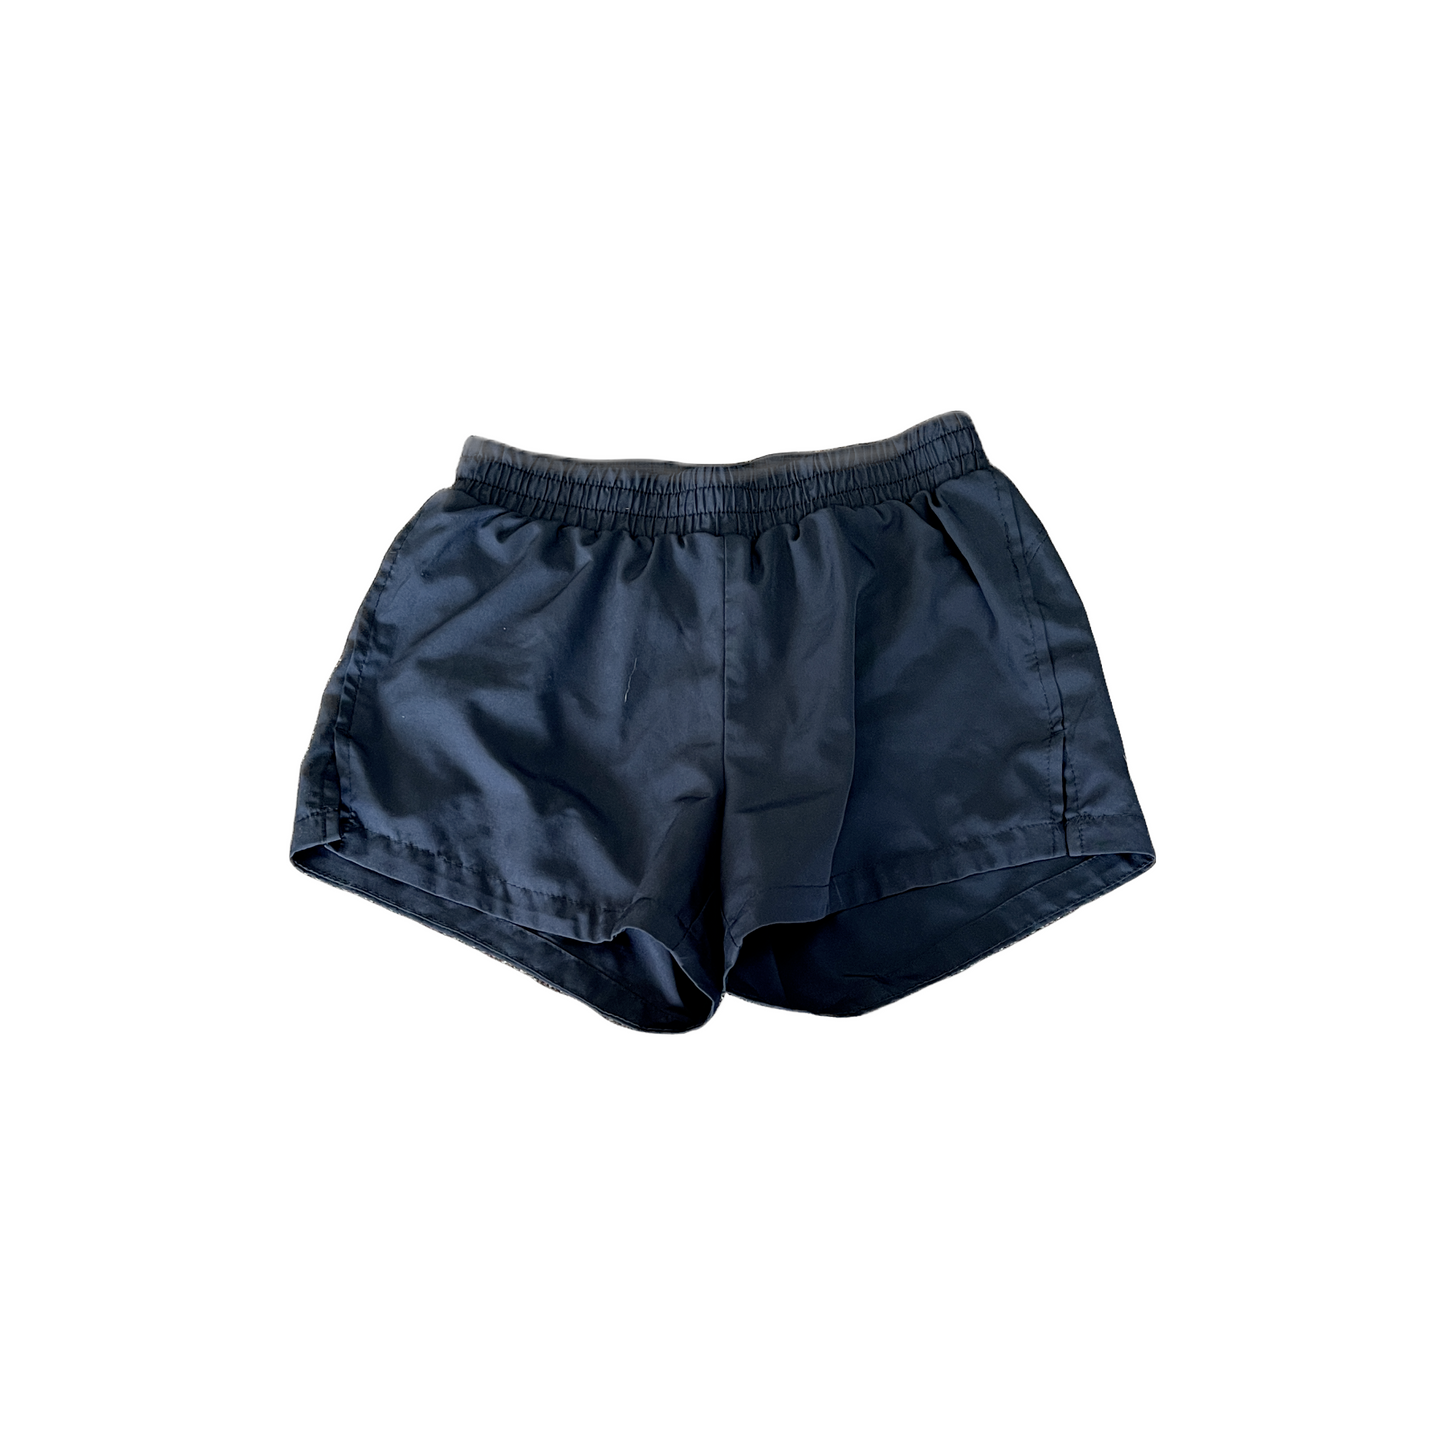 Old Navy Shorts